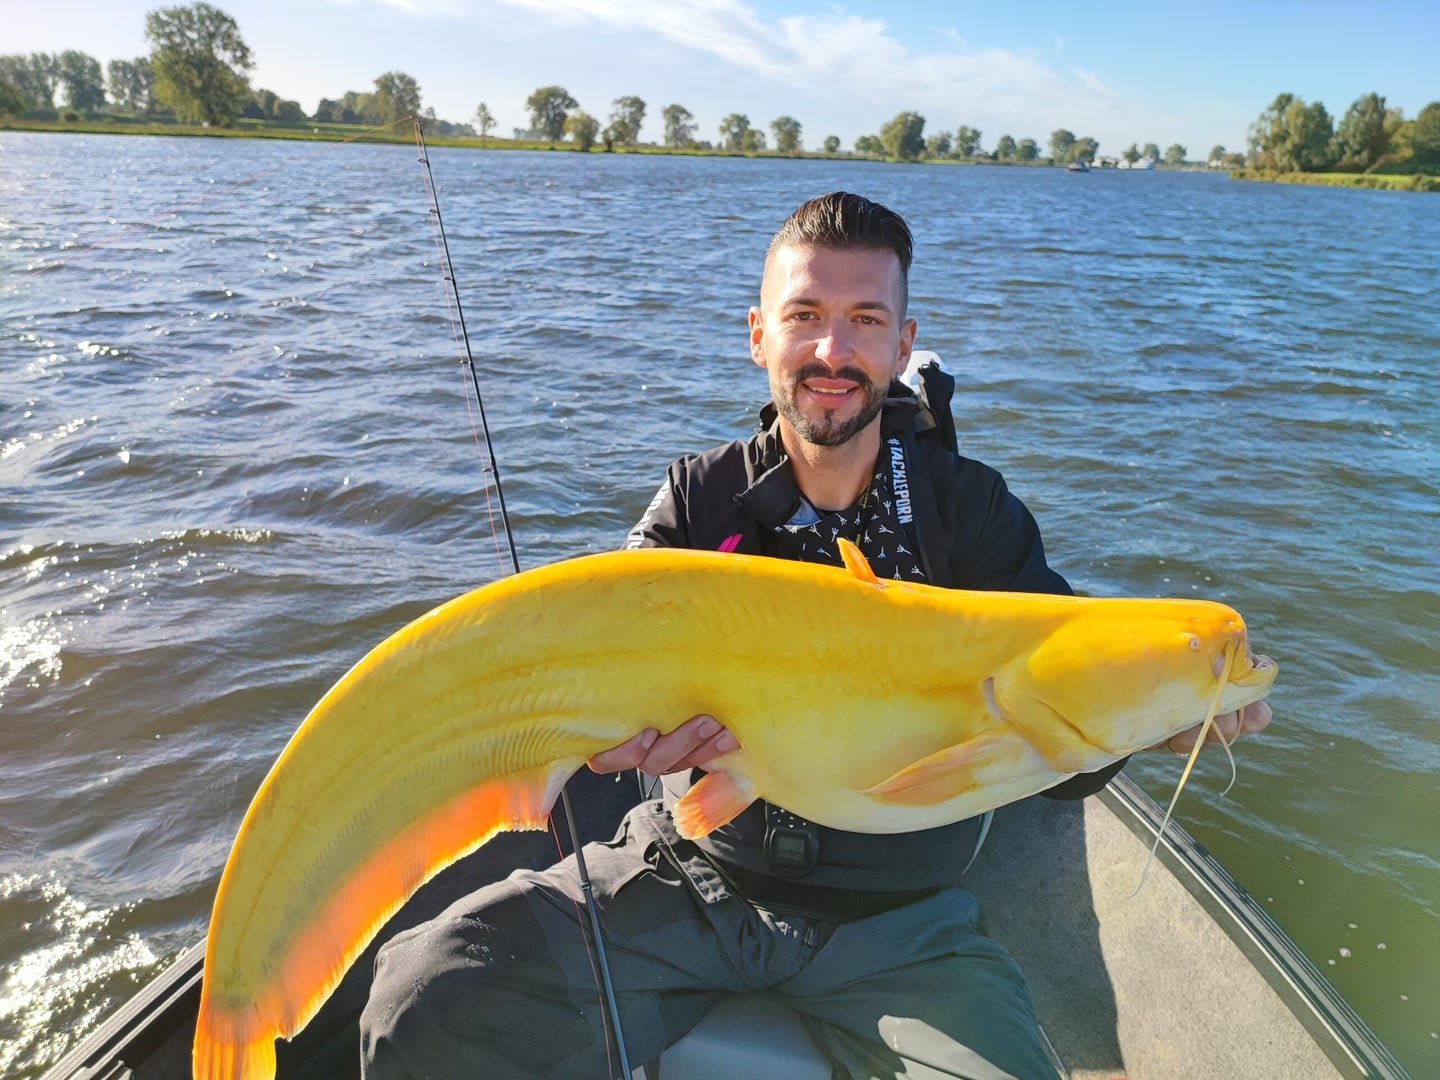 German Angler Catches Stunning “Mandarin Catfish”